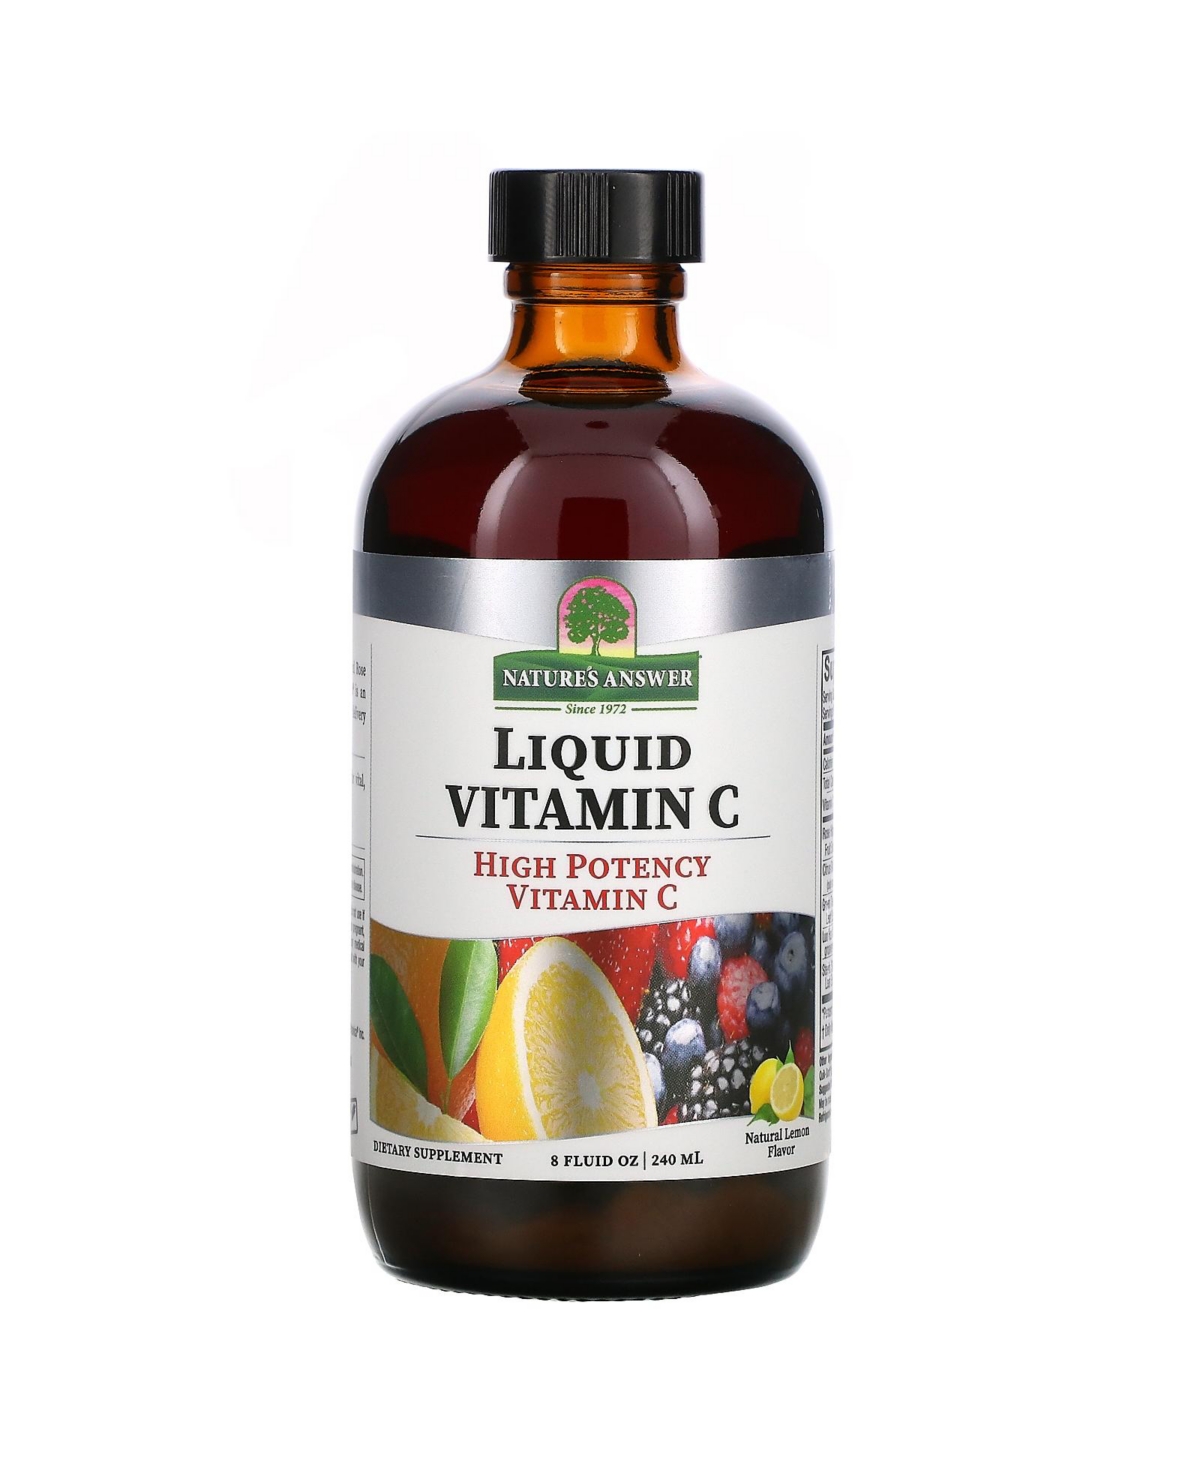 Liquid Vitamin C Natural Lemon - 8 fl oz (240 ml) - Assorted Pre-Pack